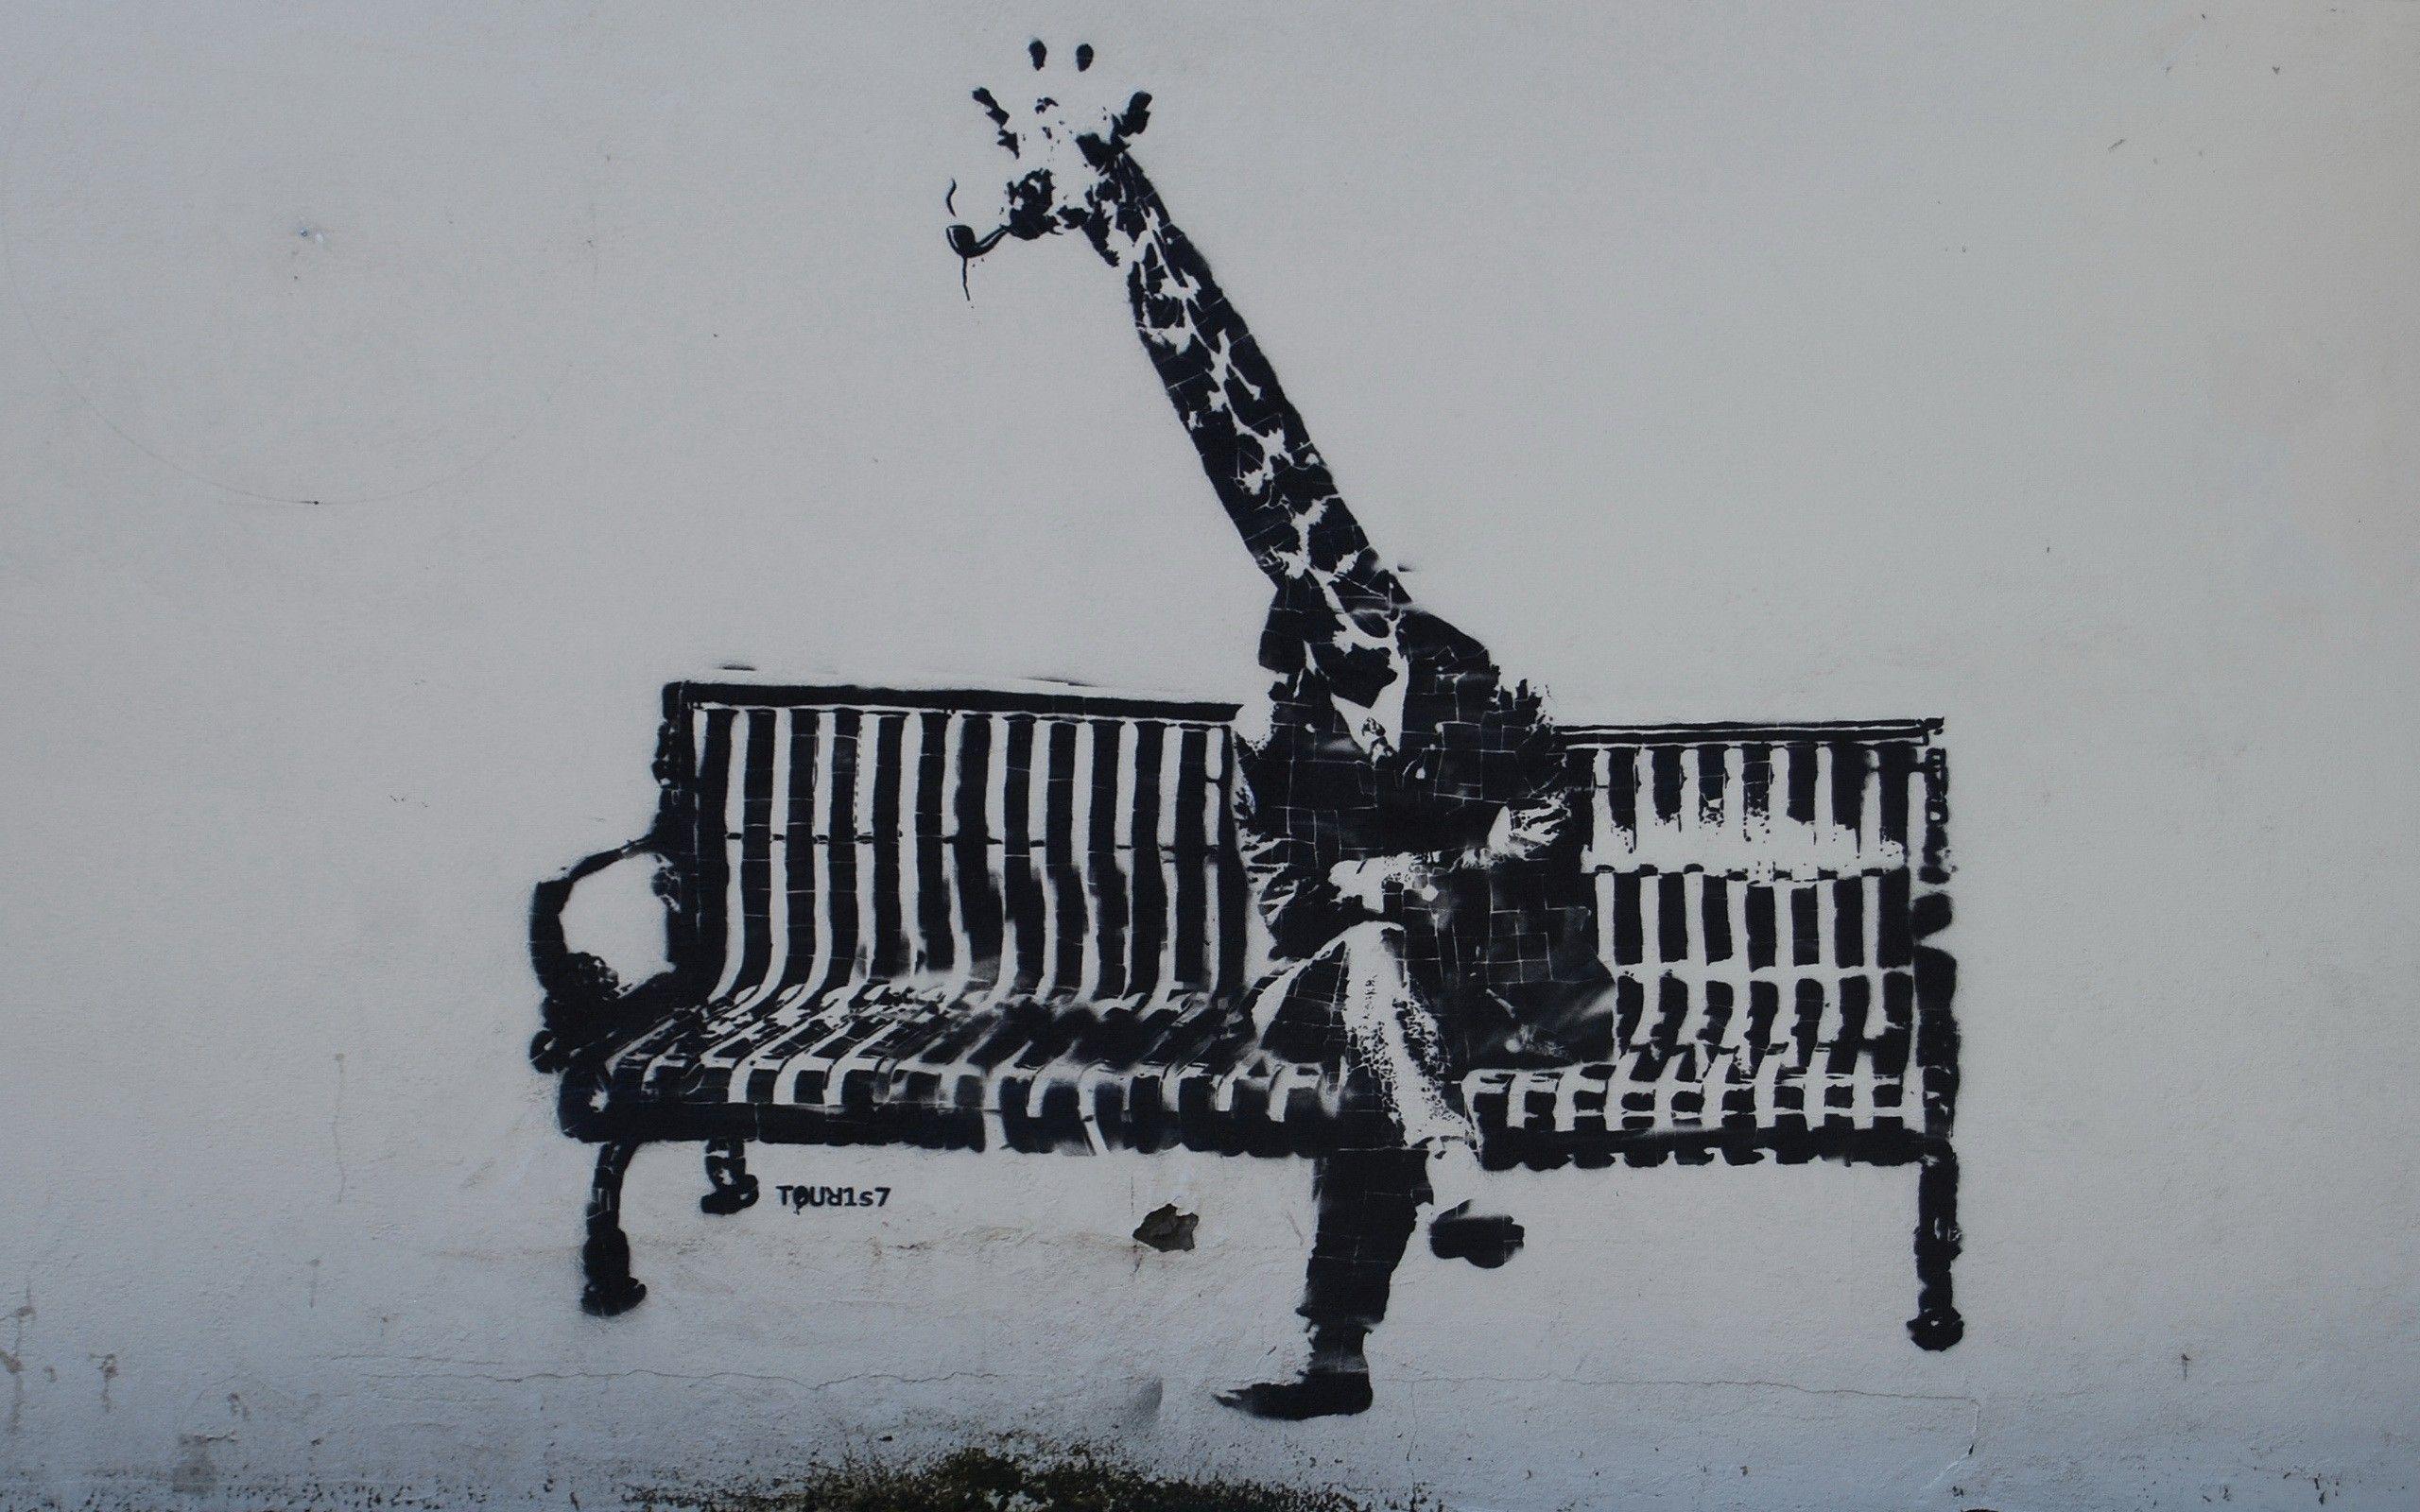 Christmas Giraffe Wallpaper